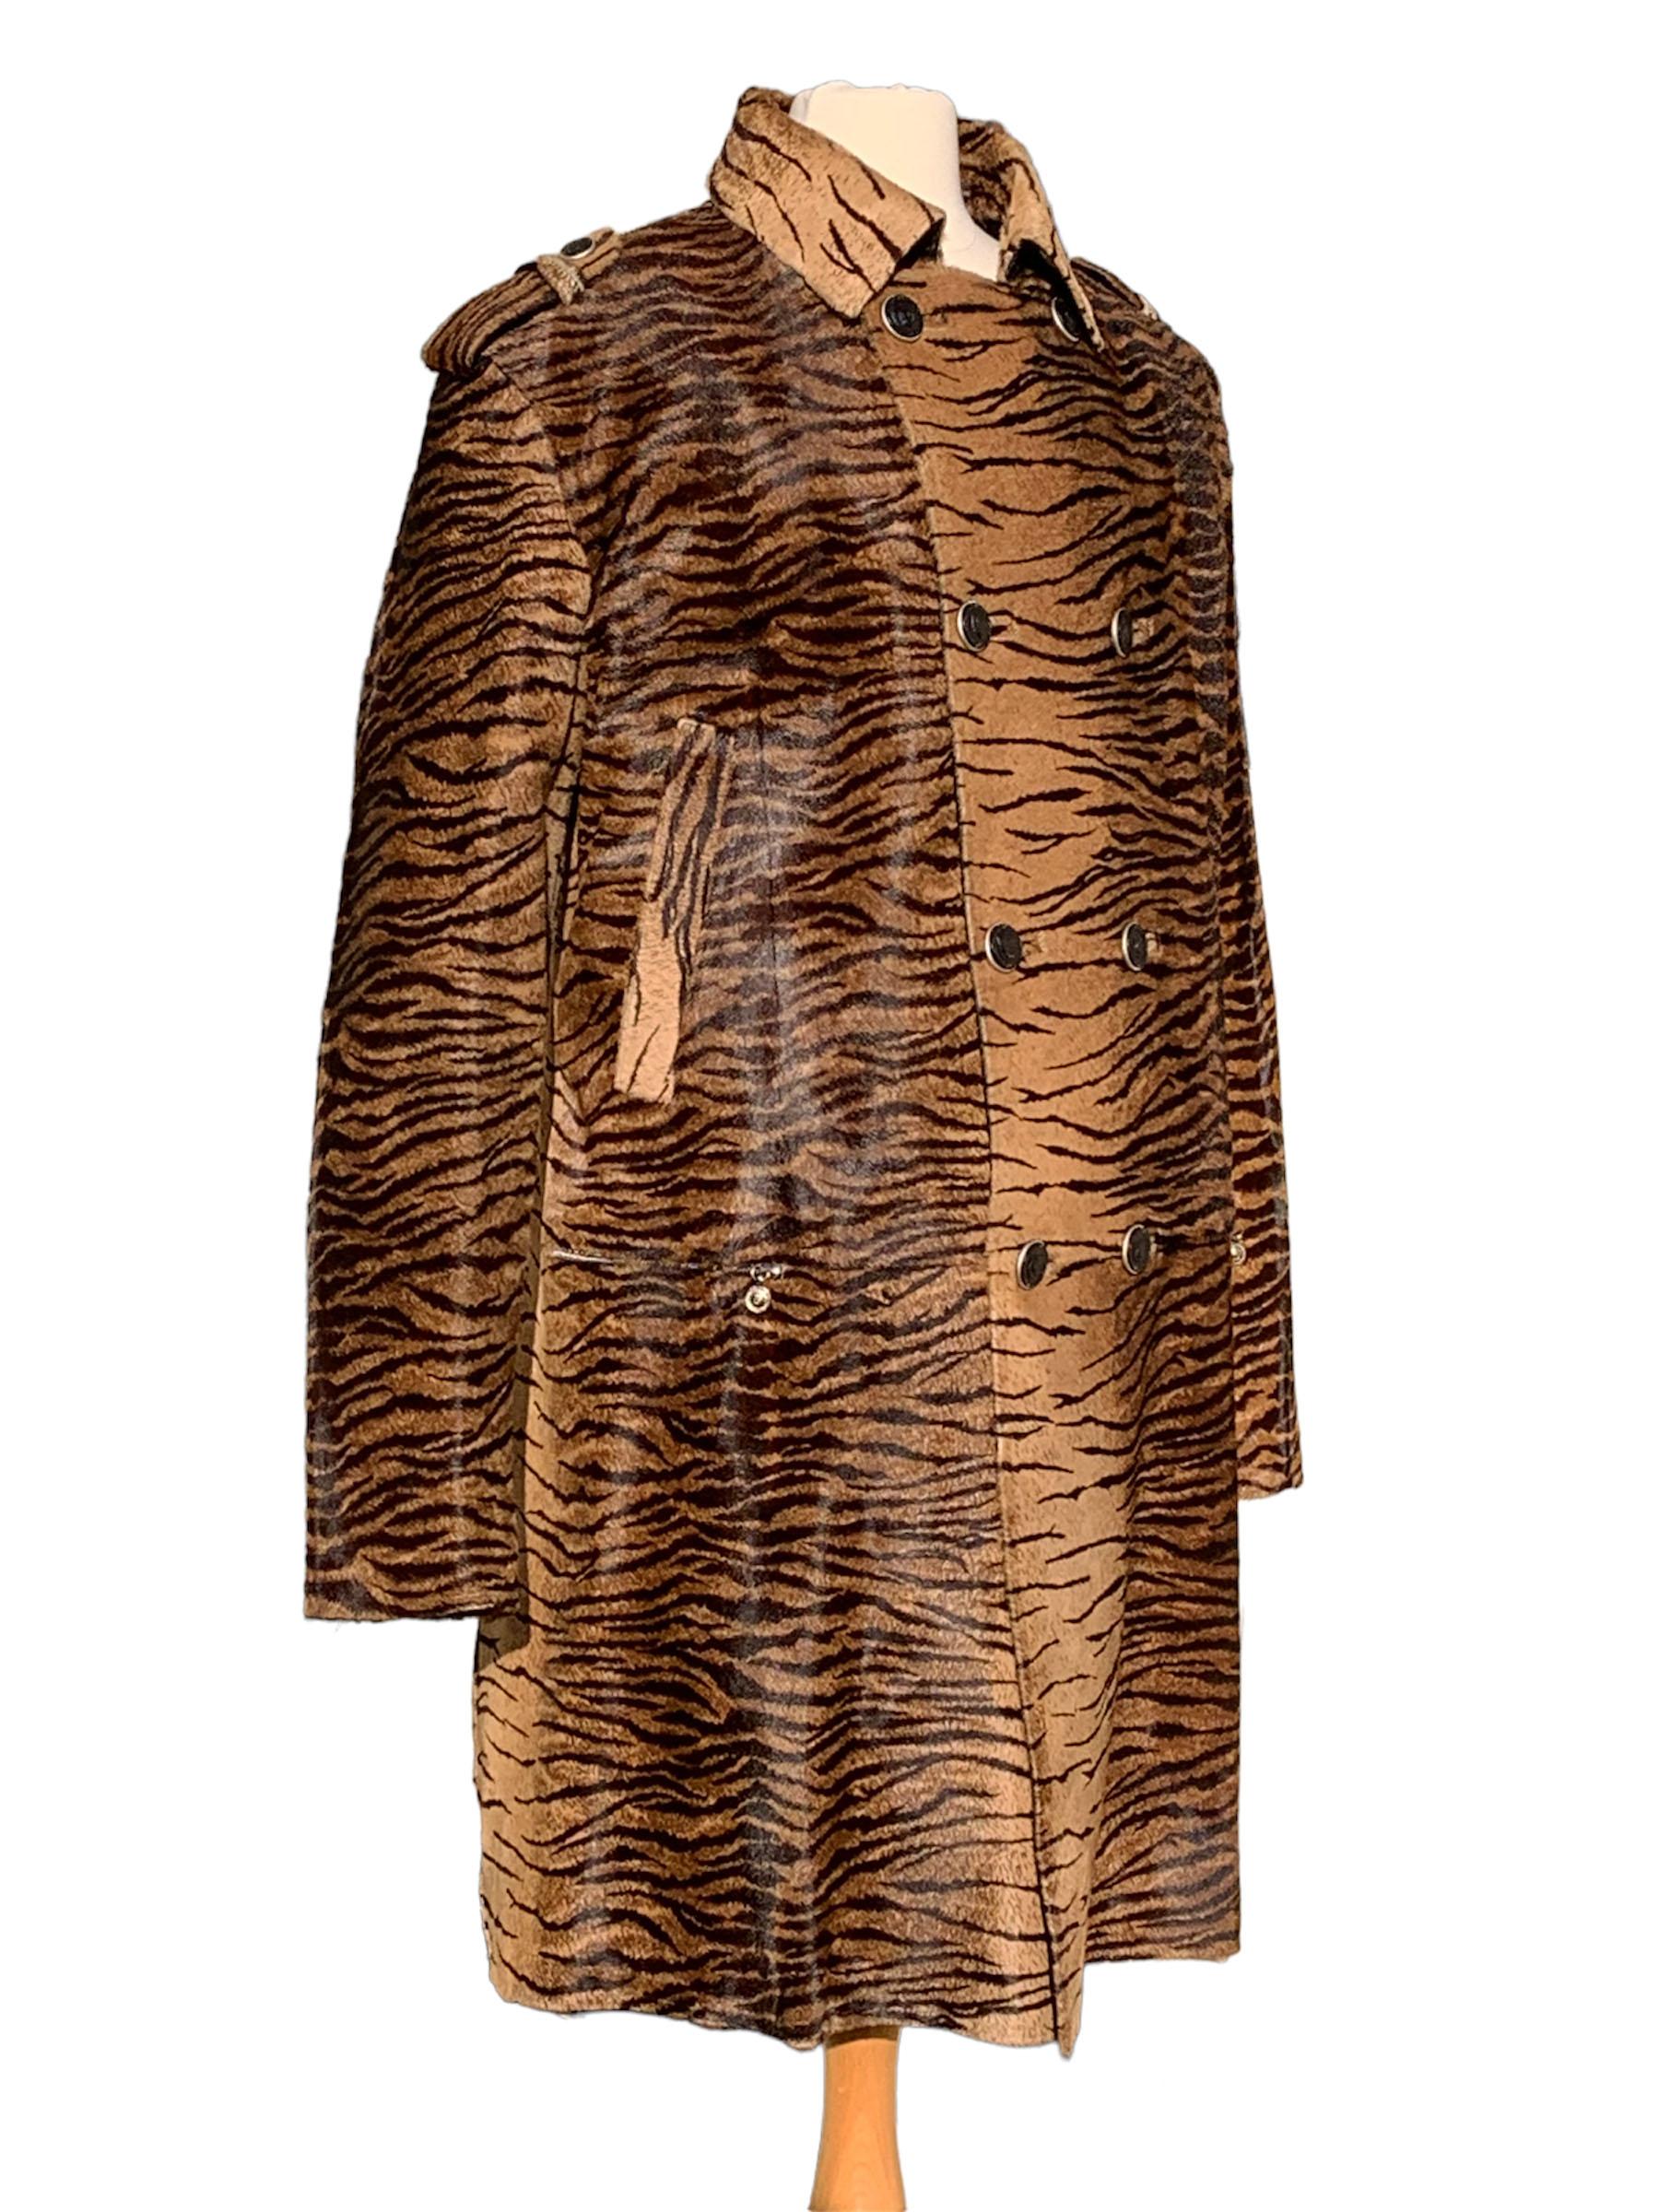 mens fur coat vintage